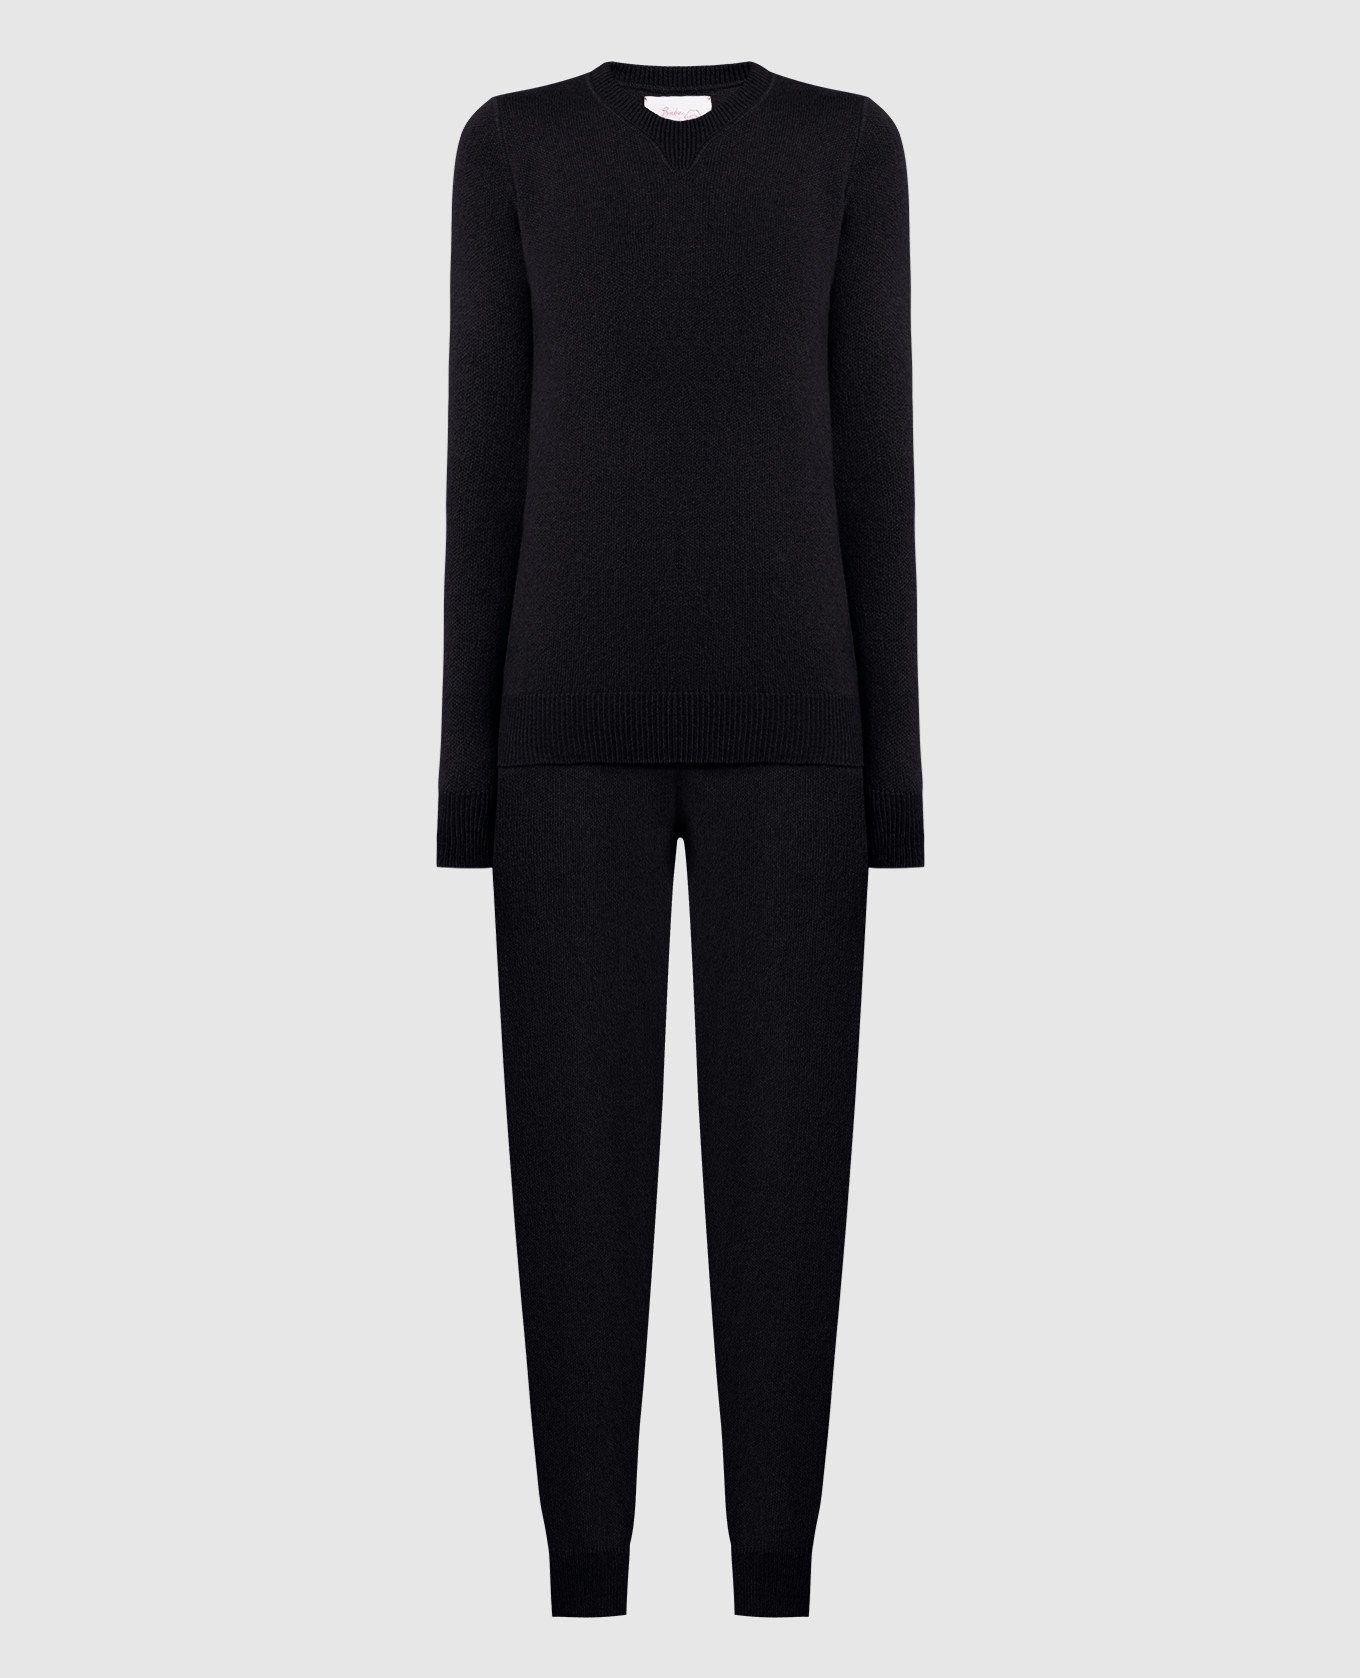 Black cashmere jumper and joggers suit